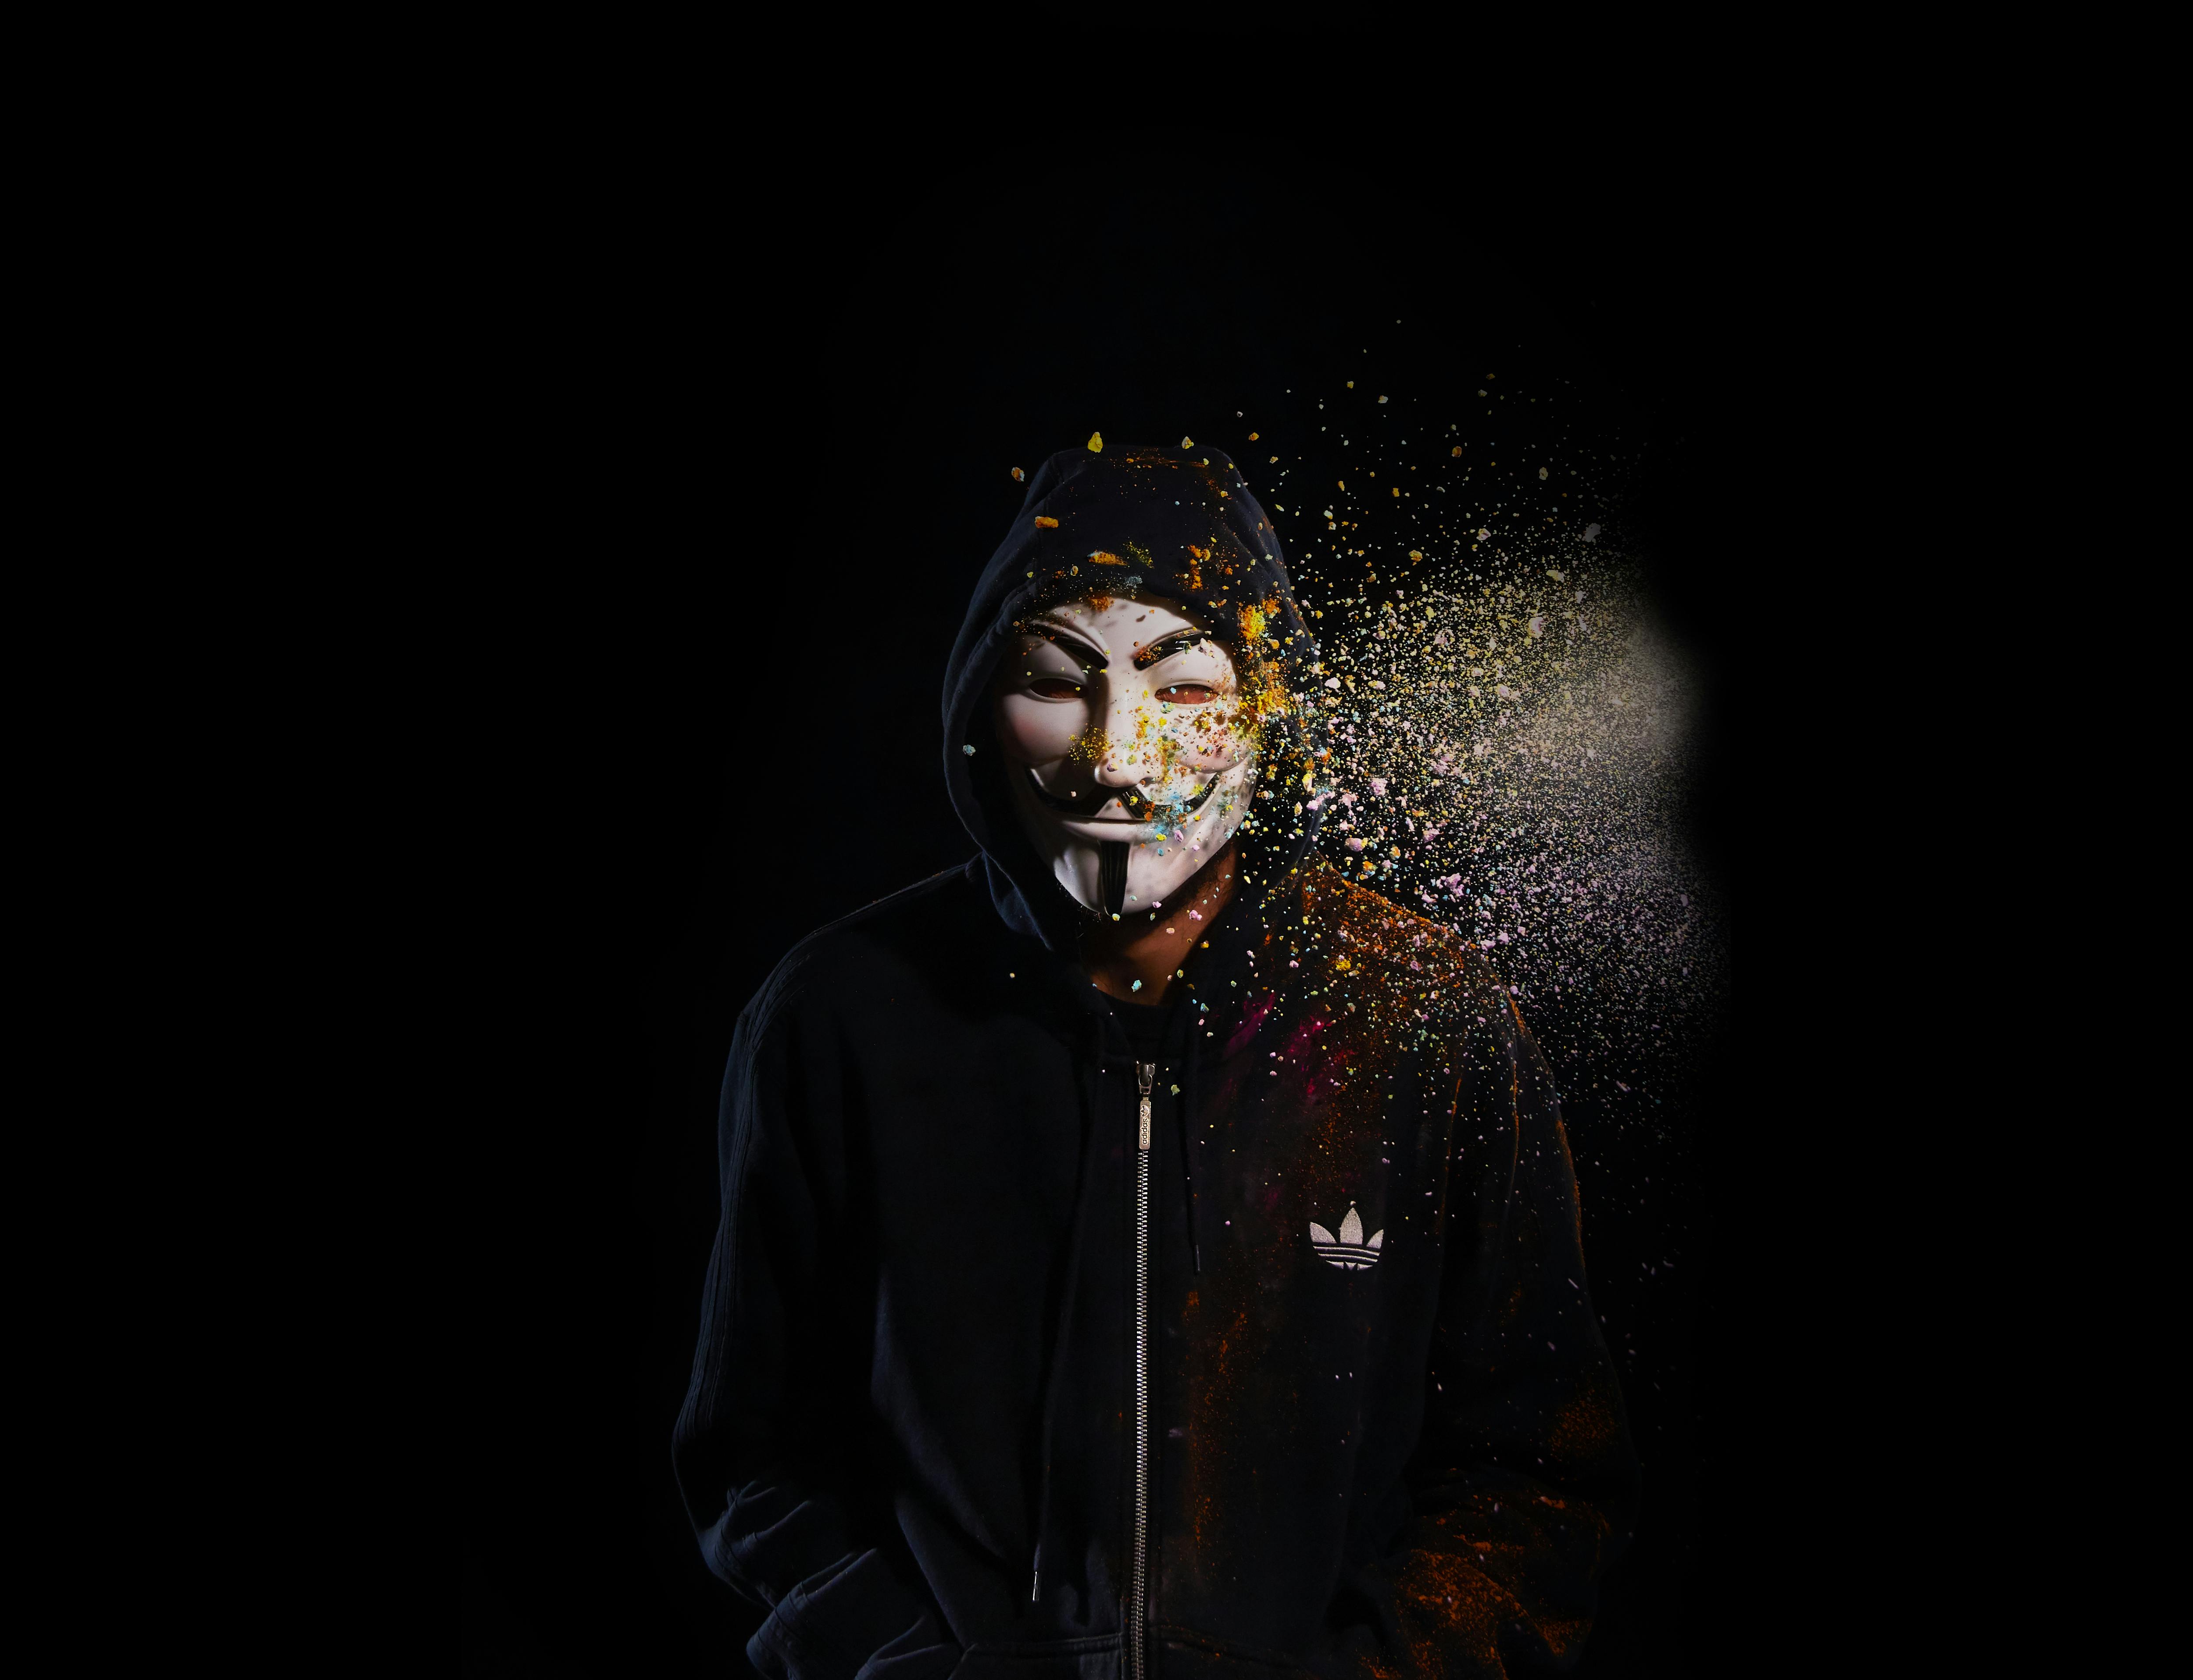 anonymous wallpaper hd